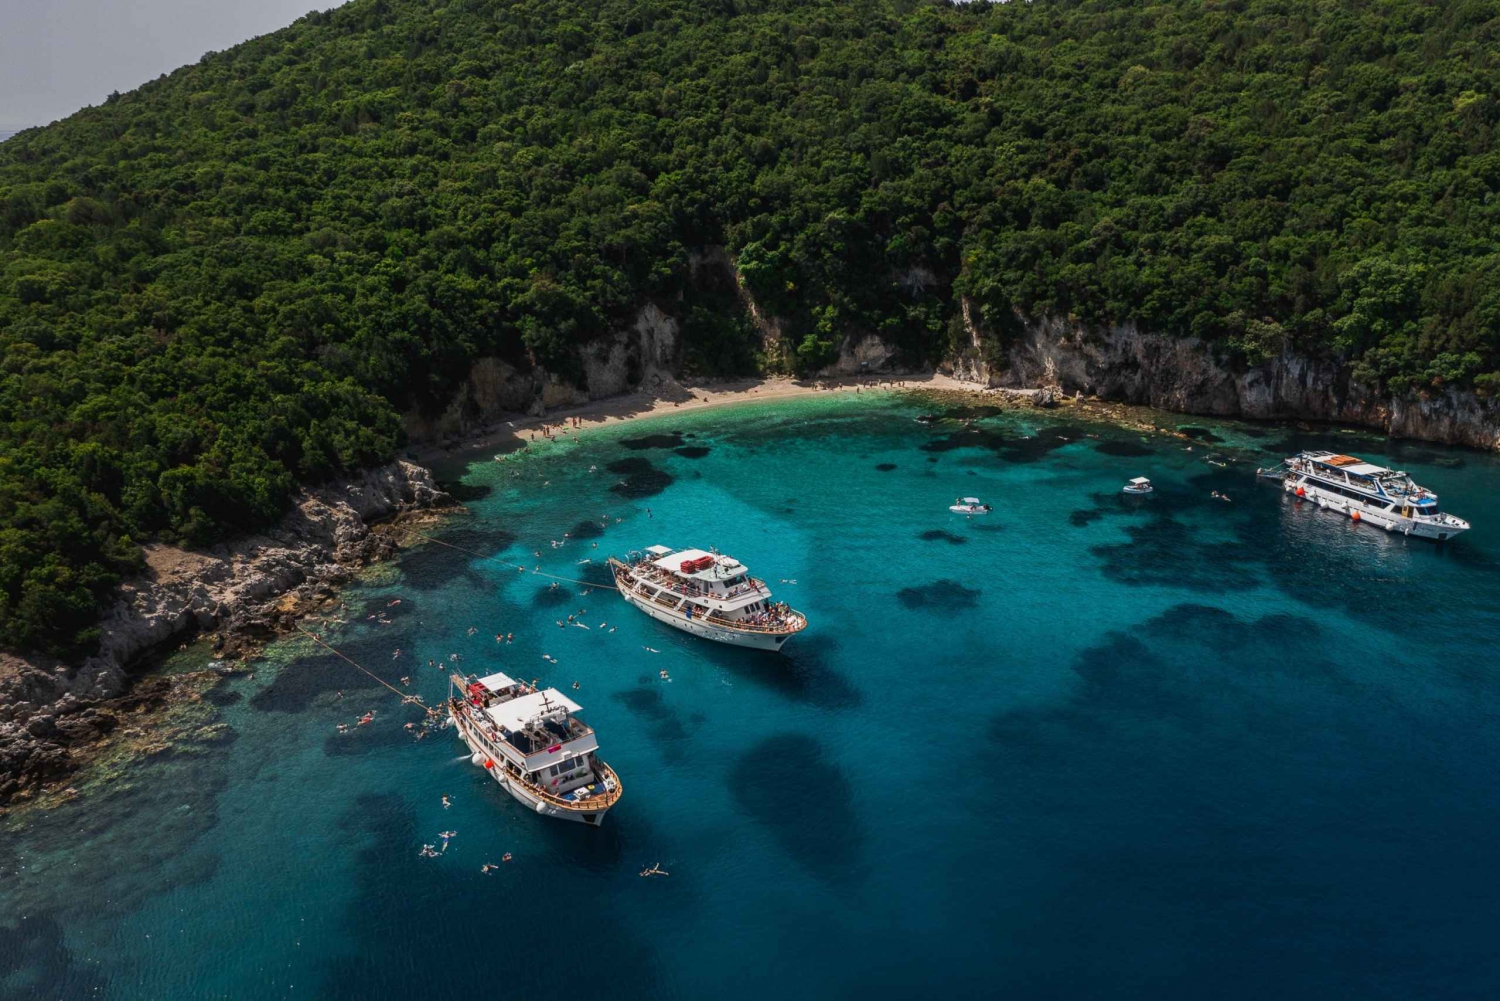 From Benitses/Lefkimmi: Blue Lagoon & Papanikolis Cruise